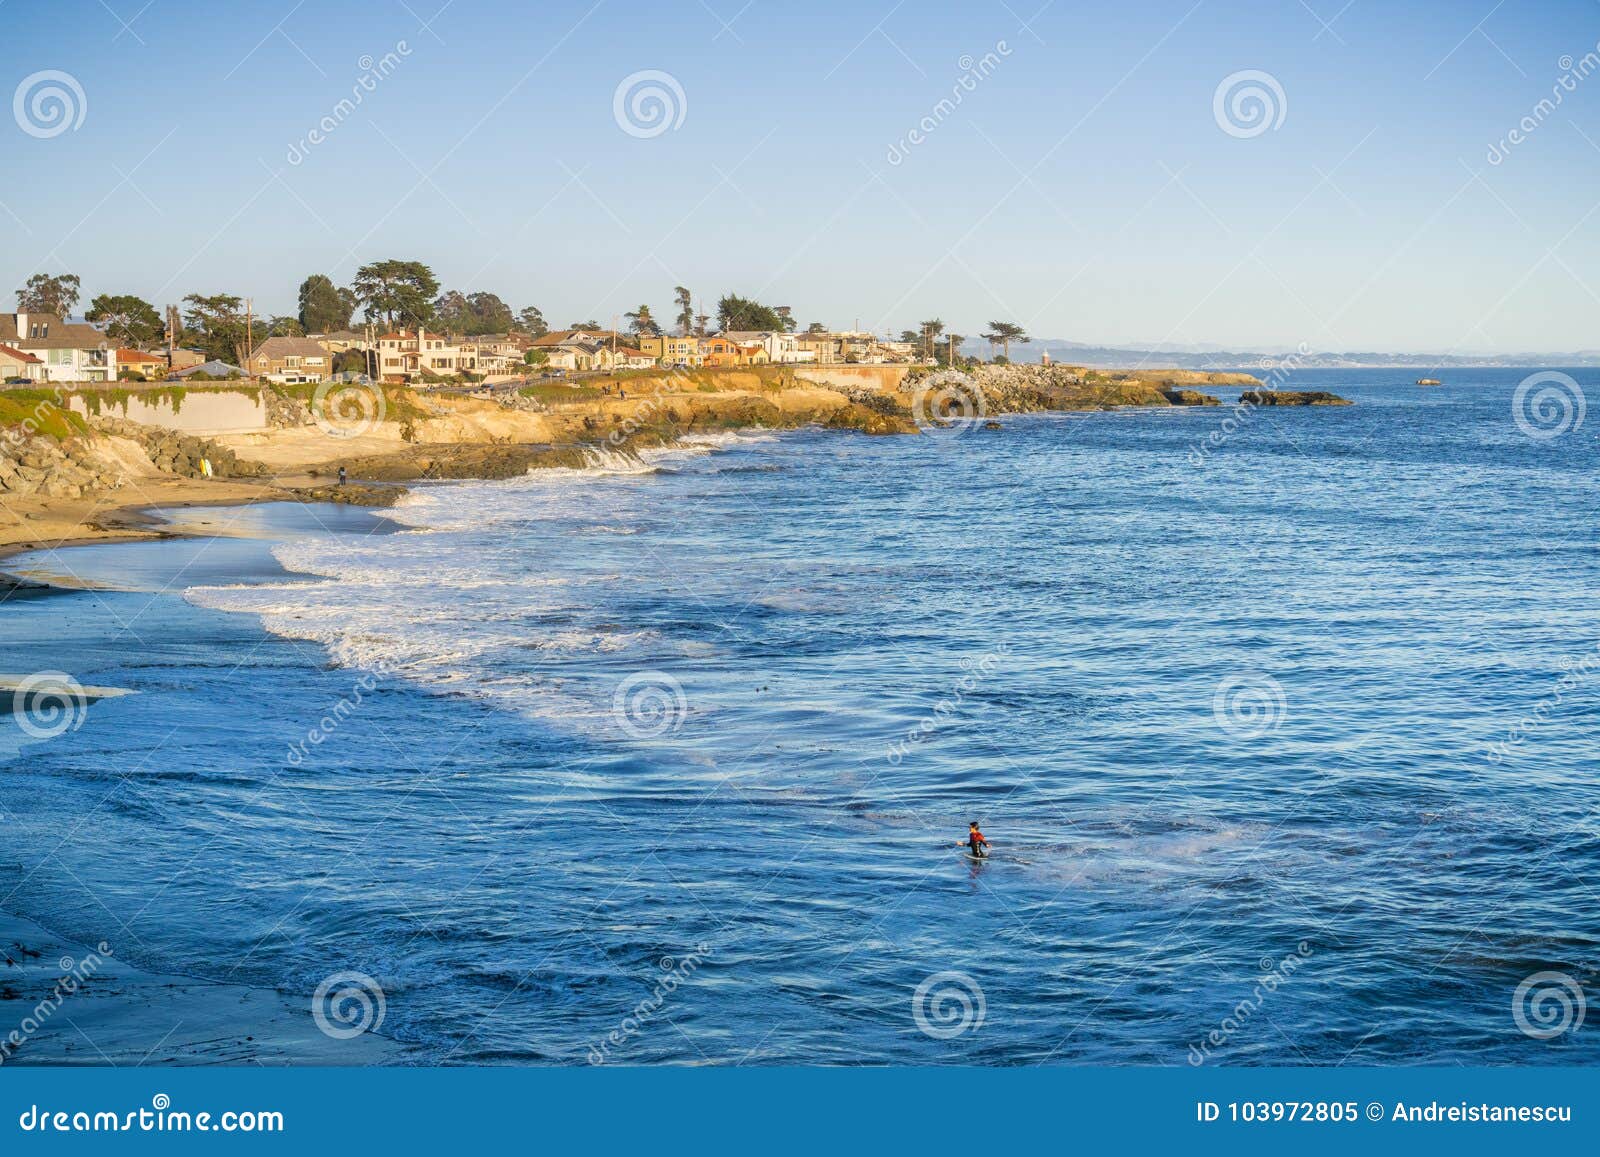 houses close to the eroded pacific ocean coastline, santa cruz, california